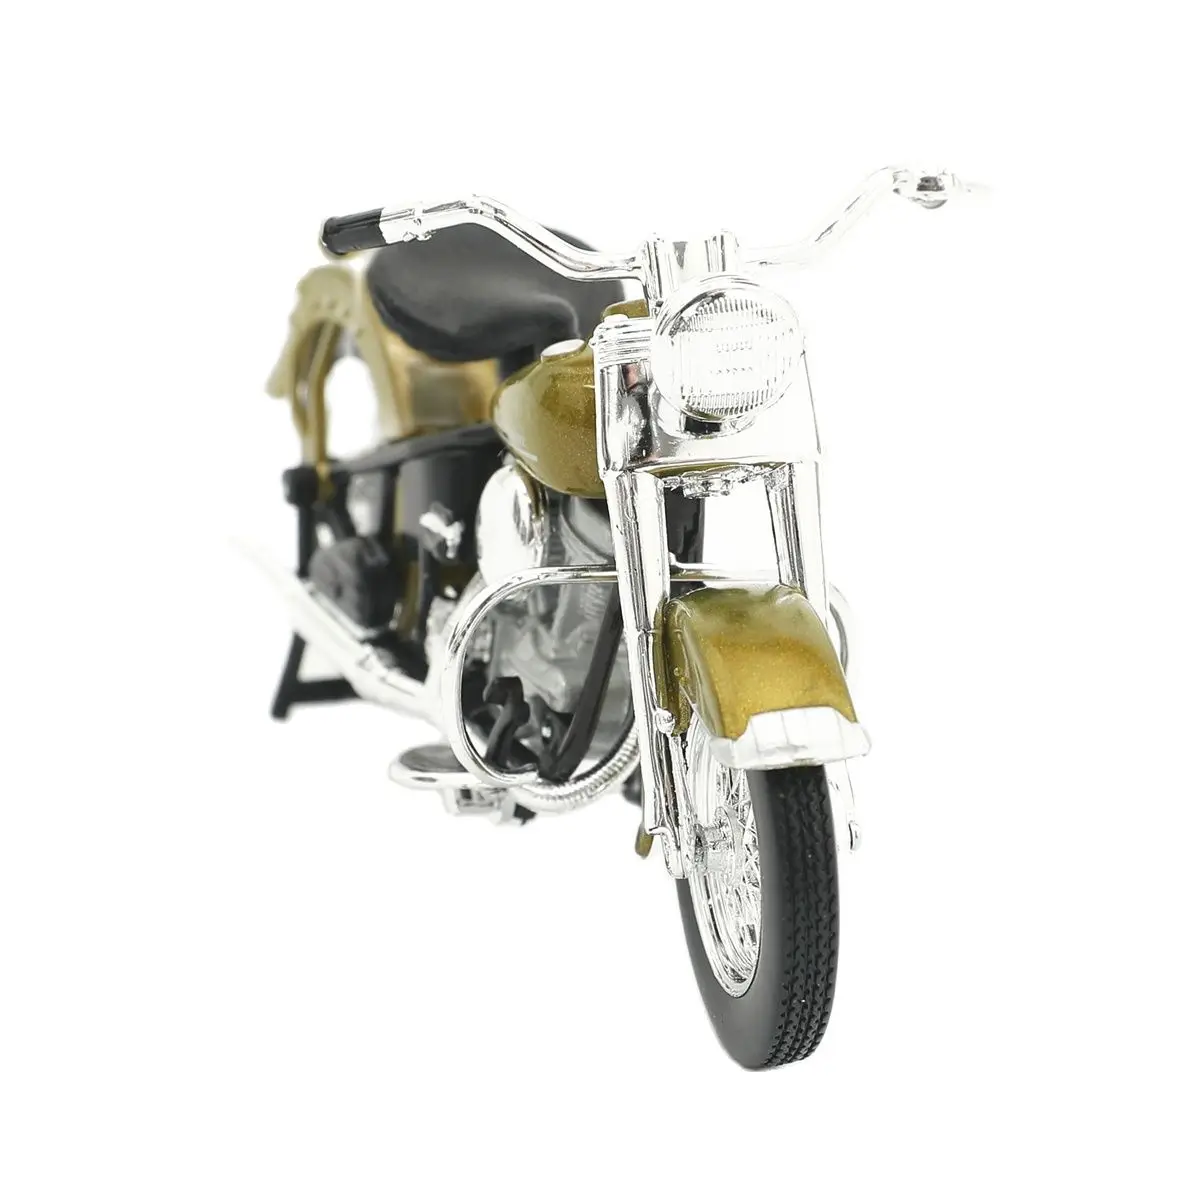 

Maisto 1:18 Harley 1953 74FL HYDRA GLIDE Alloy Motorcycle Diecast Bike Car Model Toy Collection Mini Moto Gift